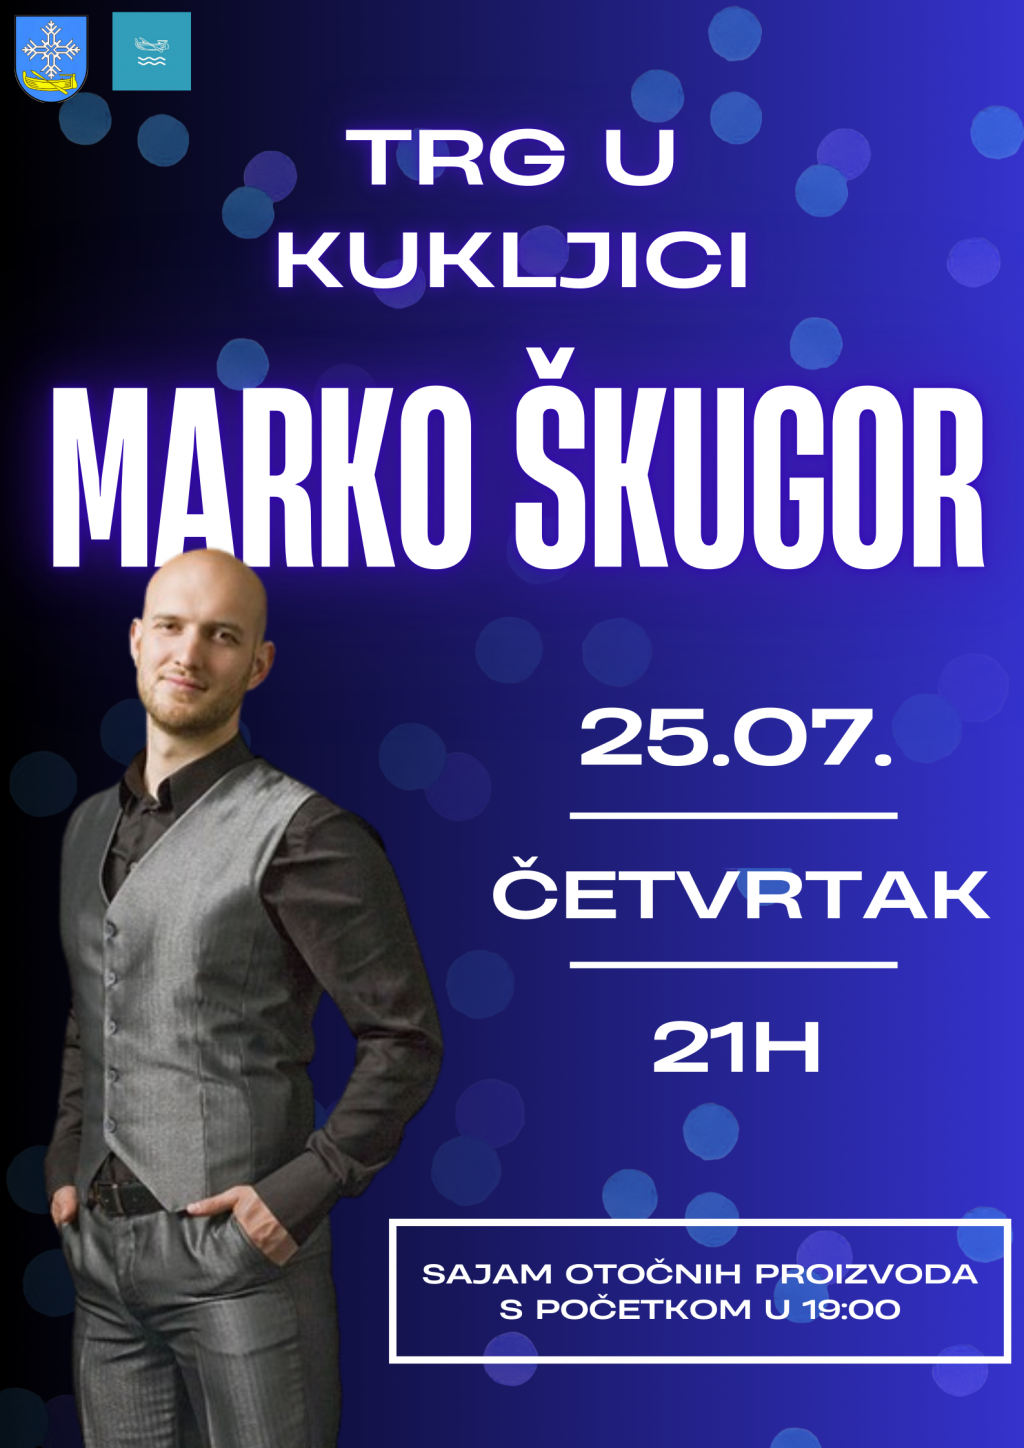 &lt;p&gt;koncert Marka Škugora u Kukljici&lt;/p&gt;